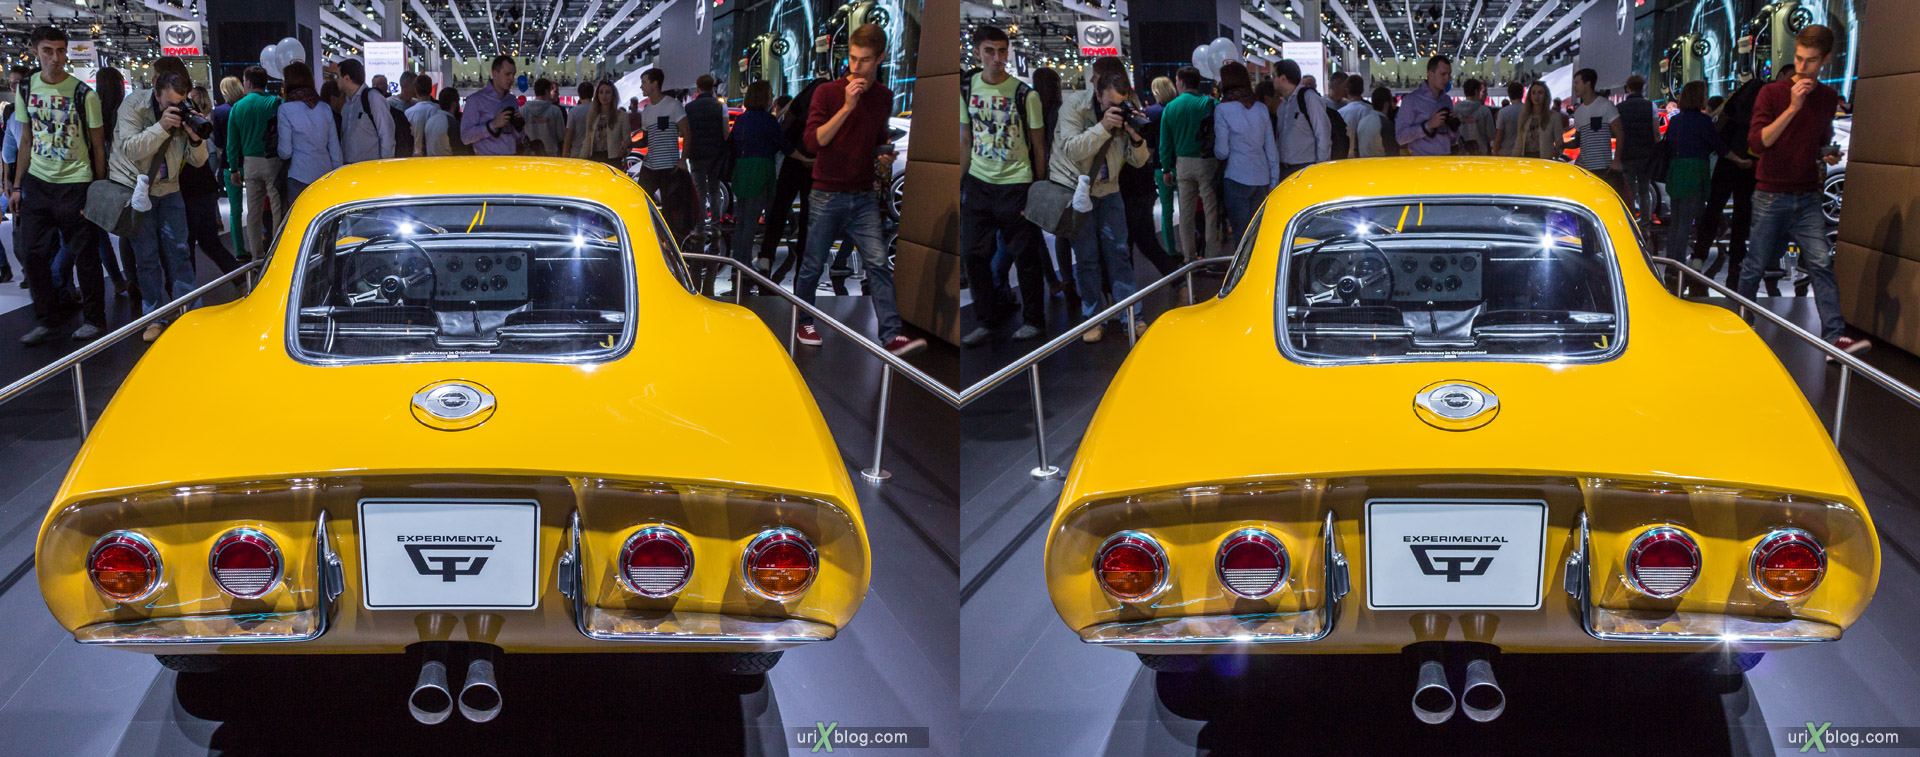 2014, Moscow International Automobile Salon, MIAS, Crocus Expo, Moscow, Russia, augest, 3D, stereo pair, cross-eyed, crossview, cross view stereo pair, stereoscopic